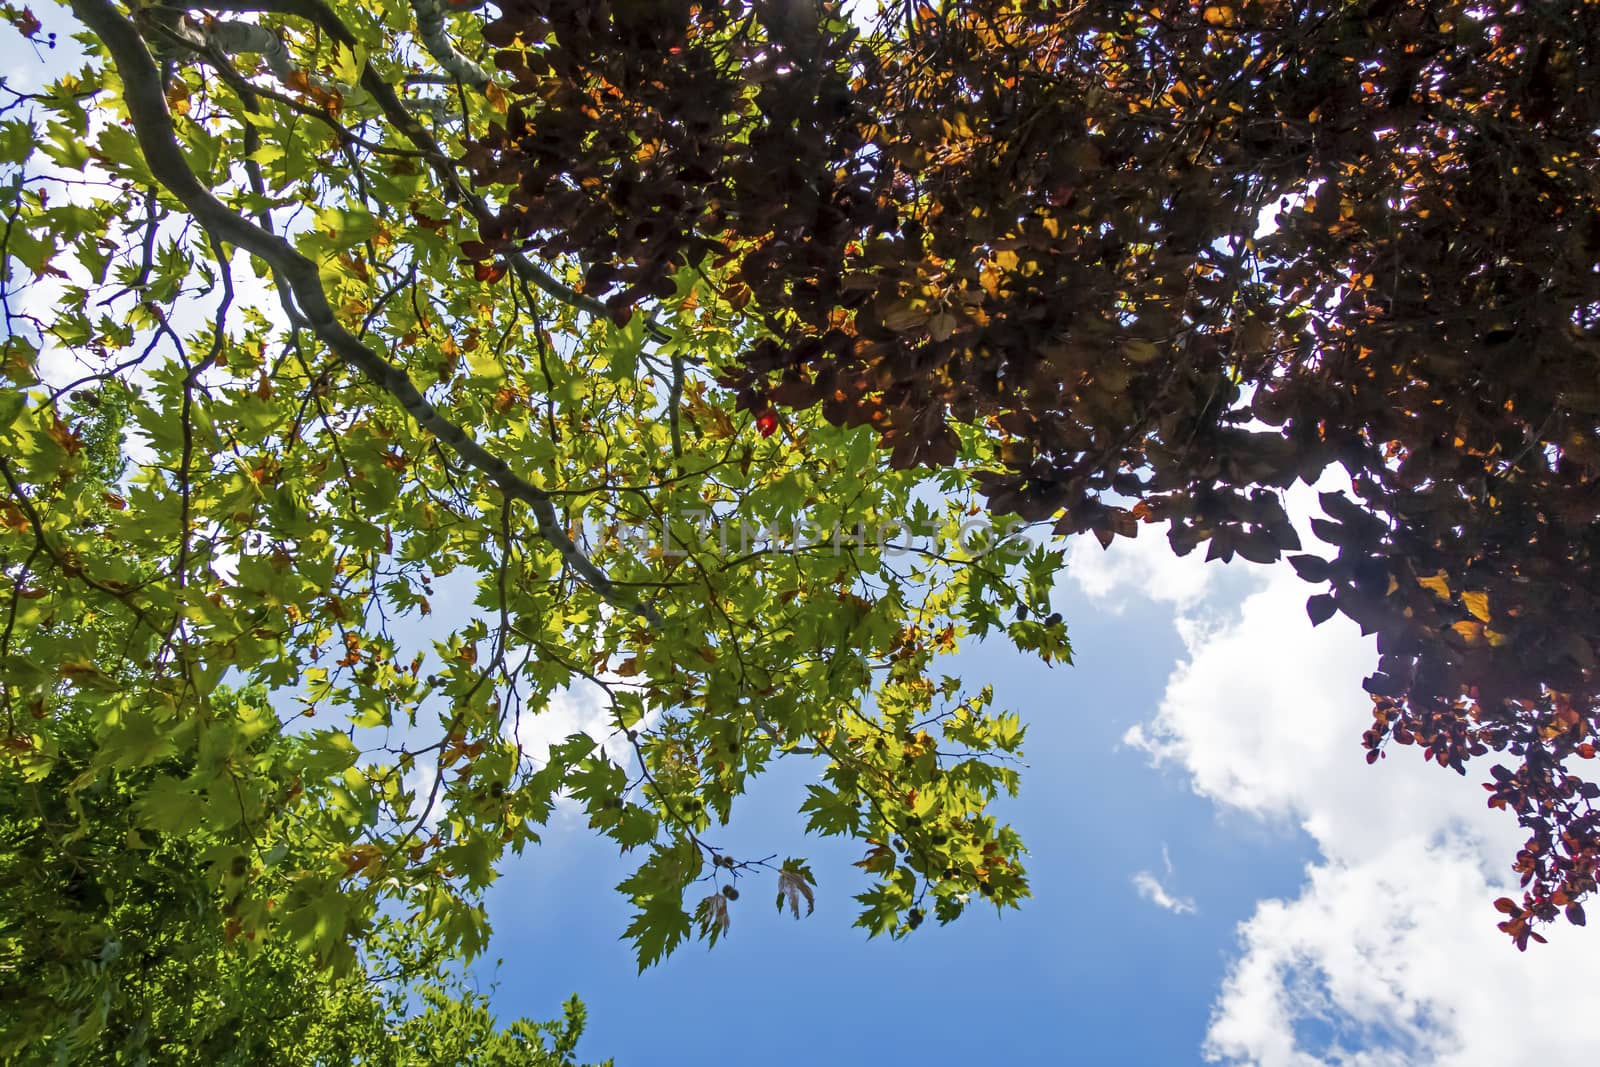 autumn leaves on a tree and blue sky by yilmazsavaskandag